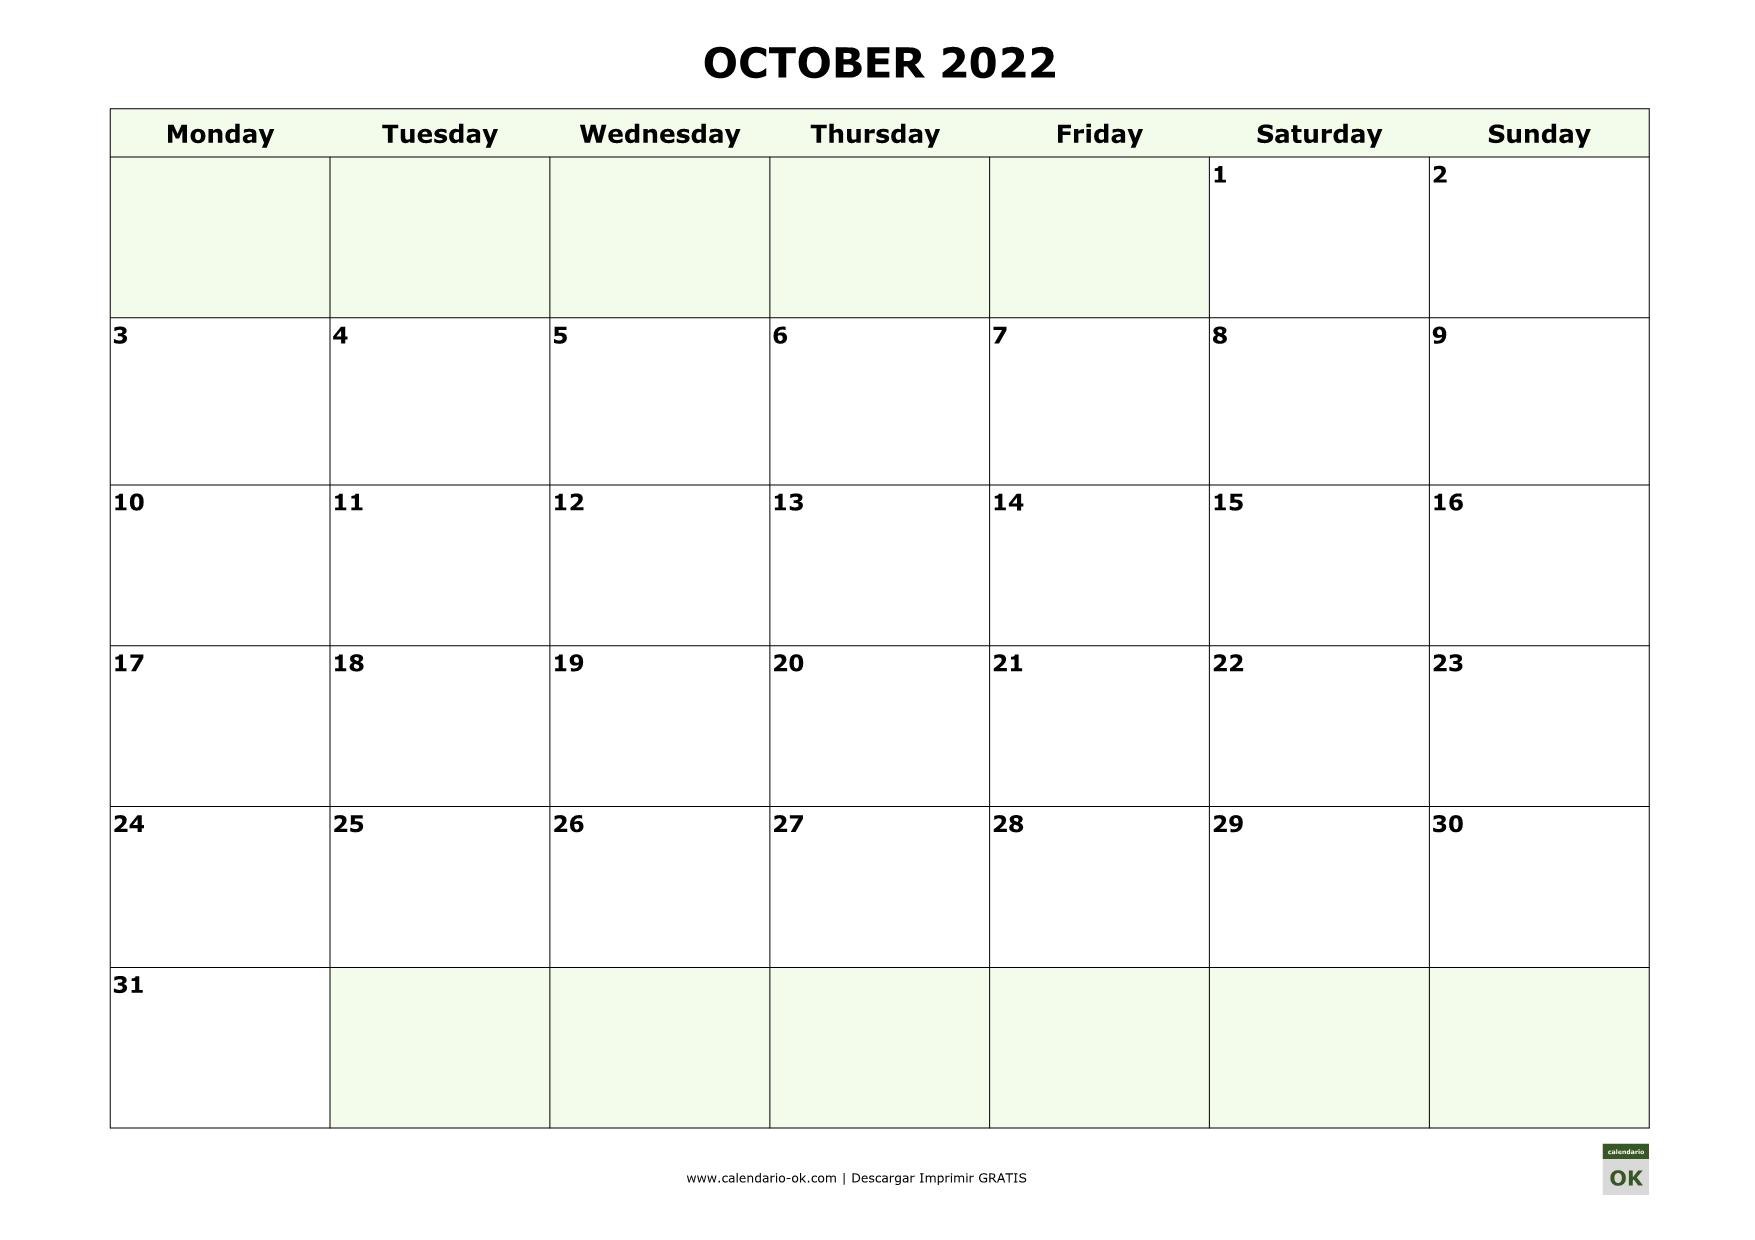 OCTUBRE 2022 calendario en INGLES